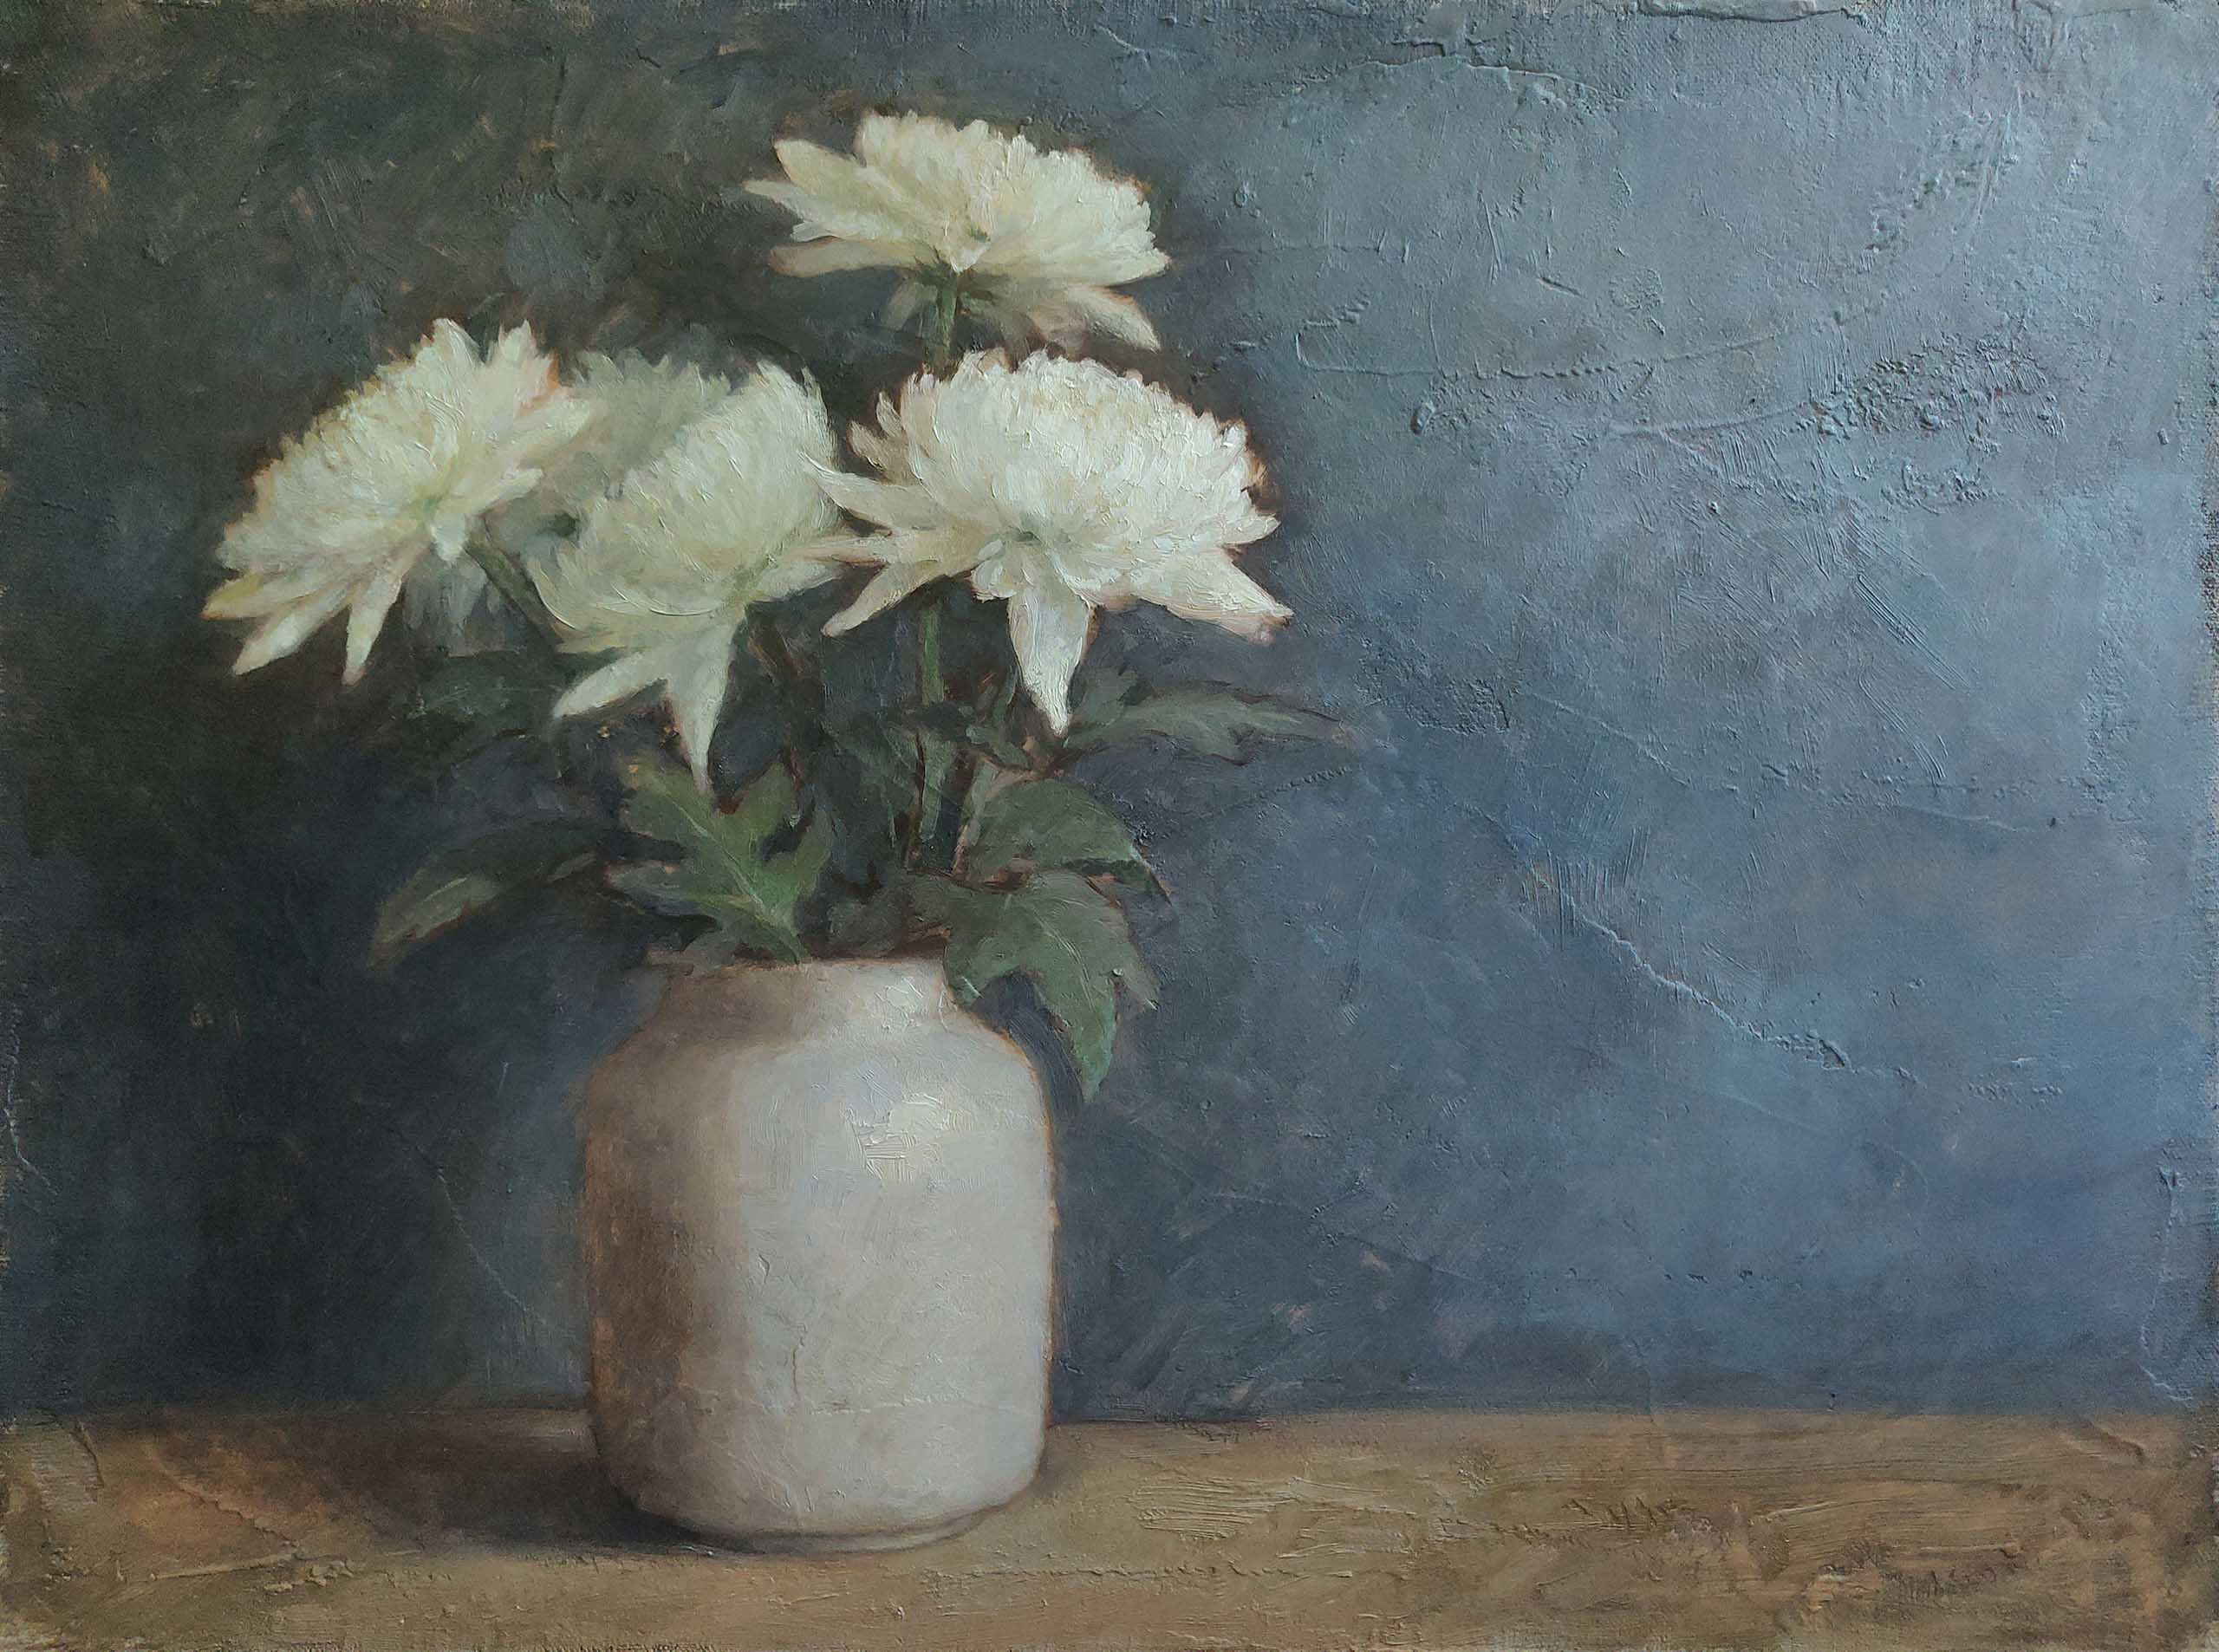 Jacky Chan, "Arrangement of white chrysanthemums", Oil on canvas, 60 x 40 cm, 2021